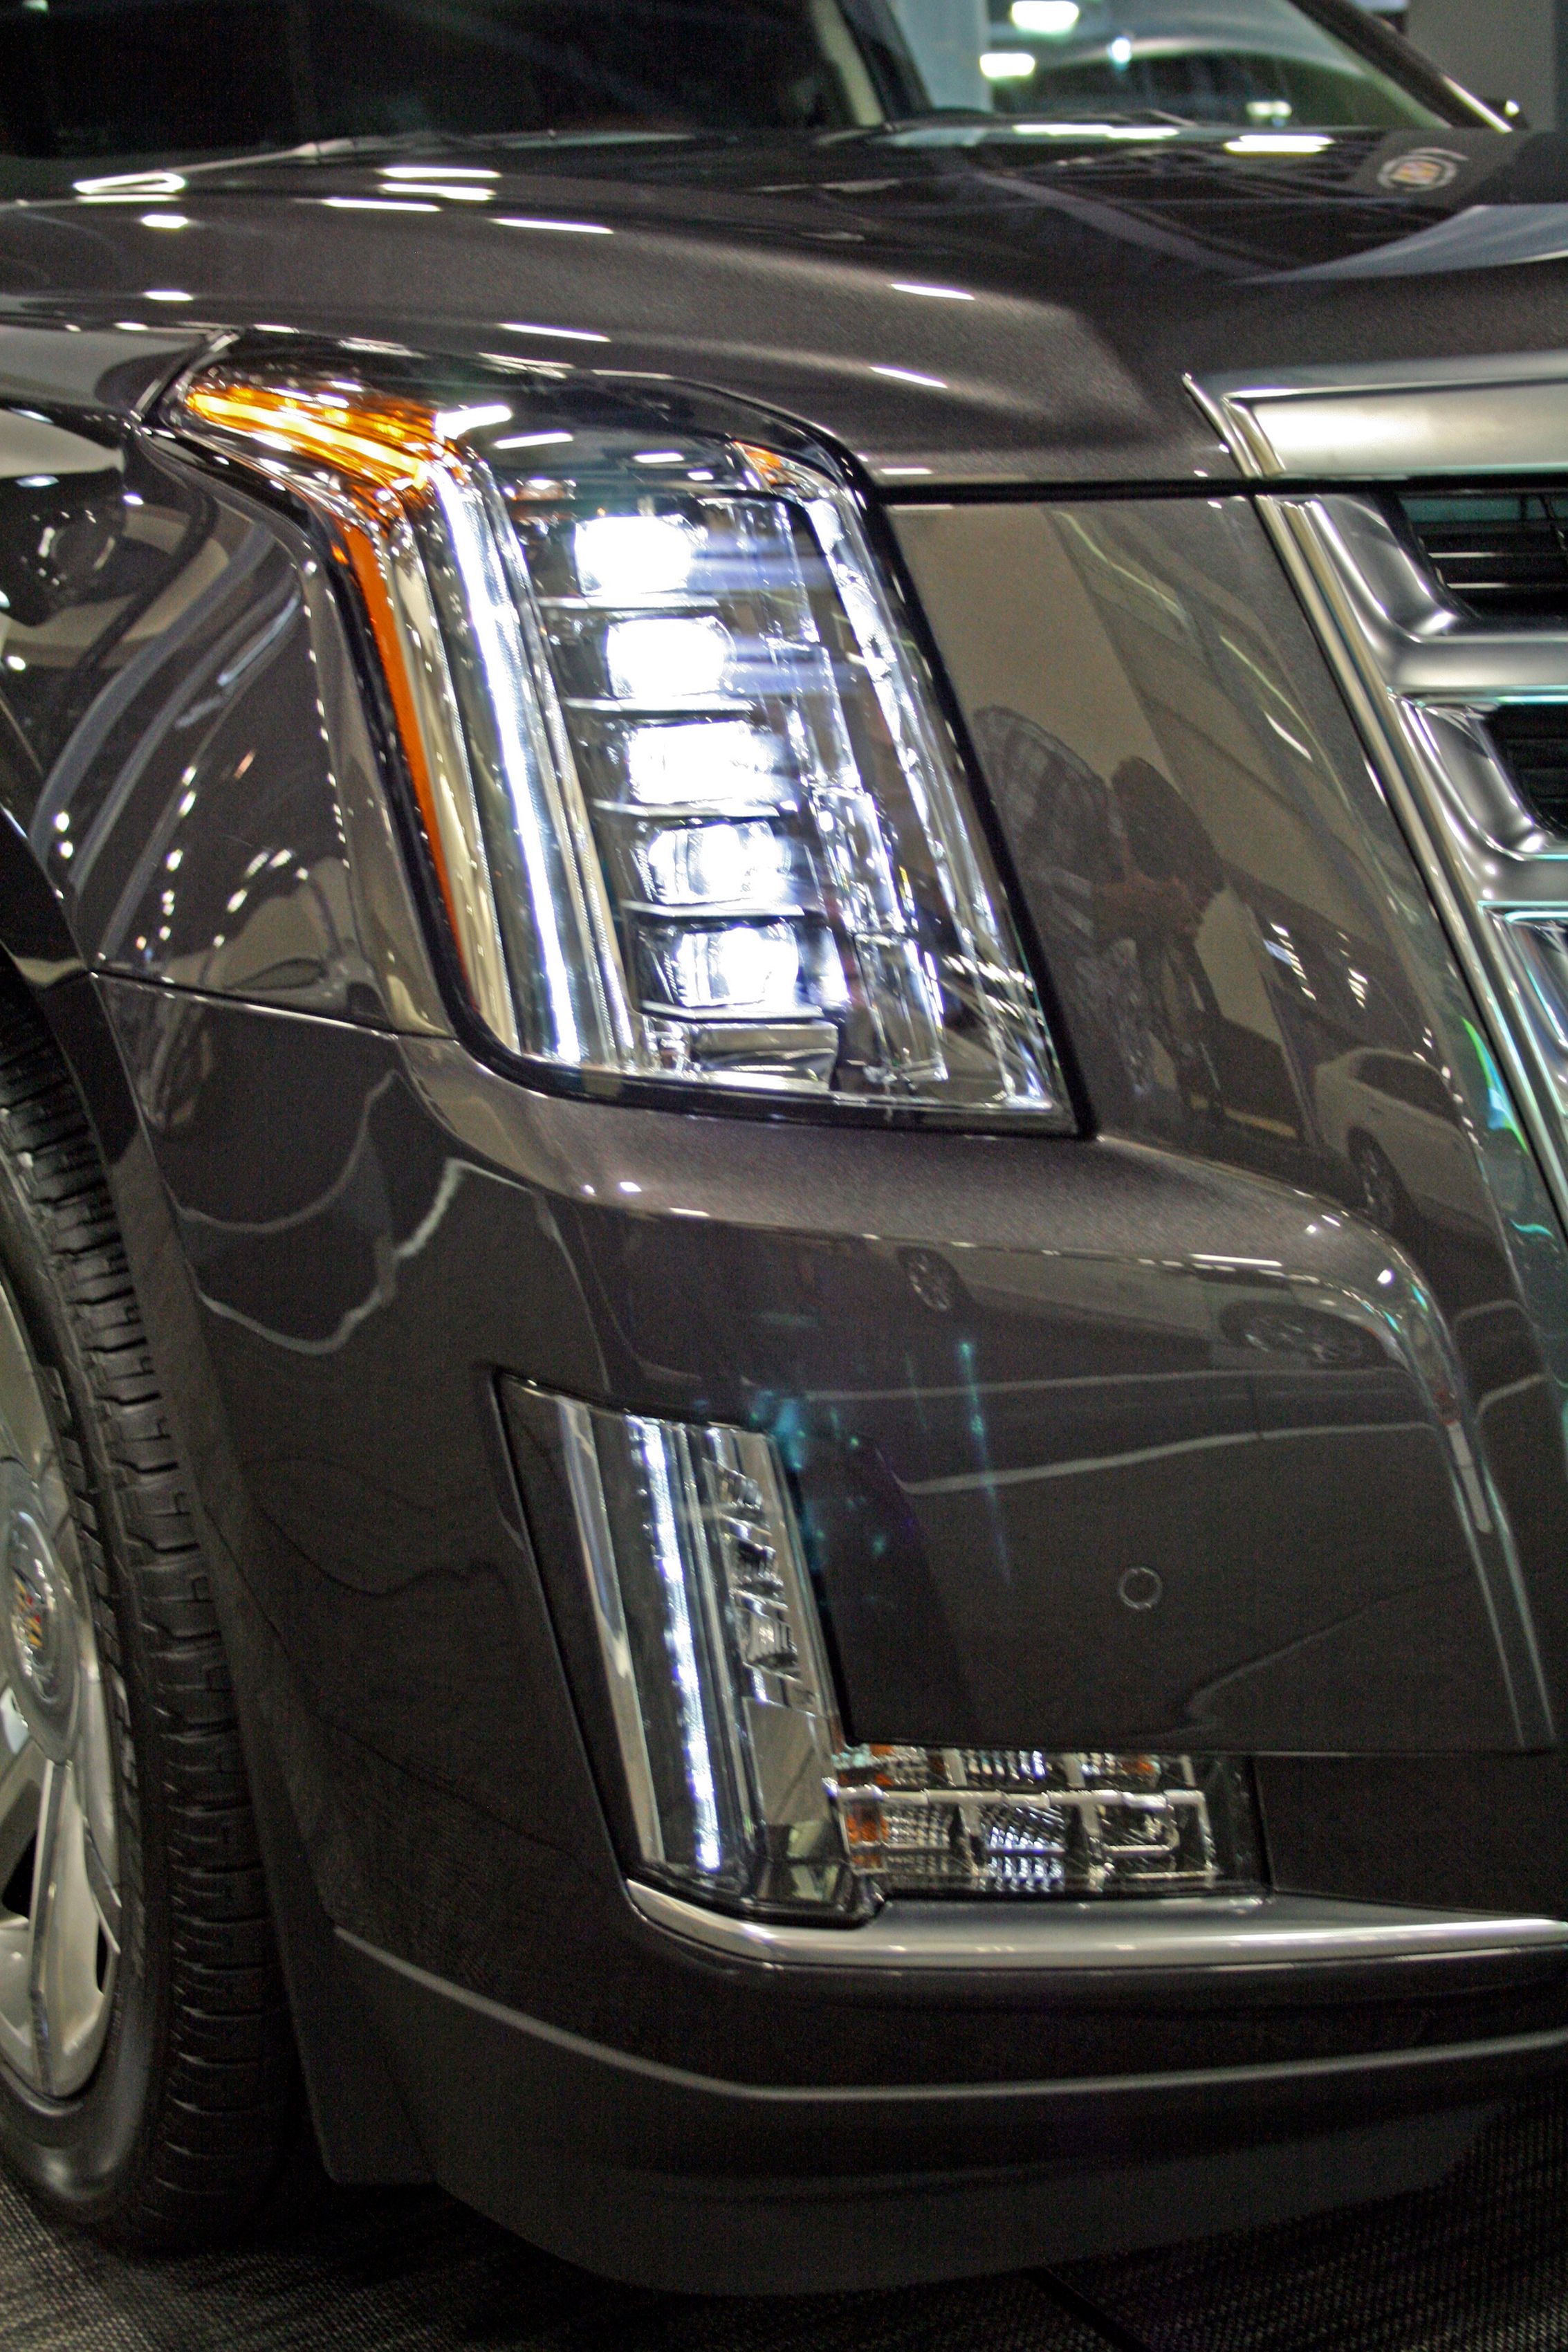 2015 Cadillac Escalade - First Impressions